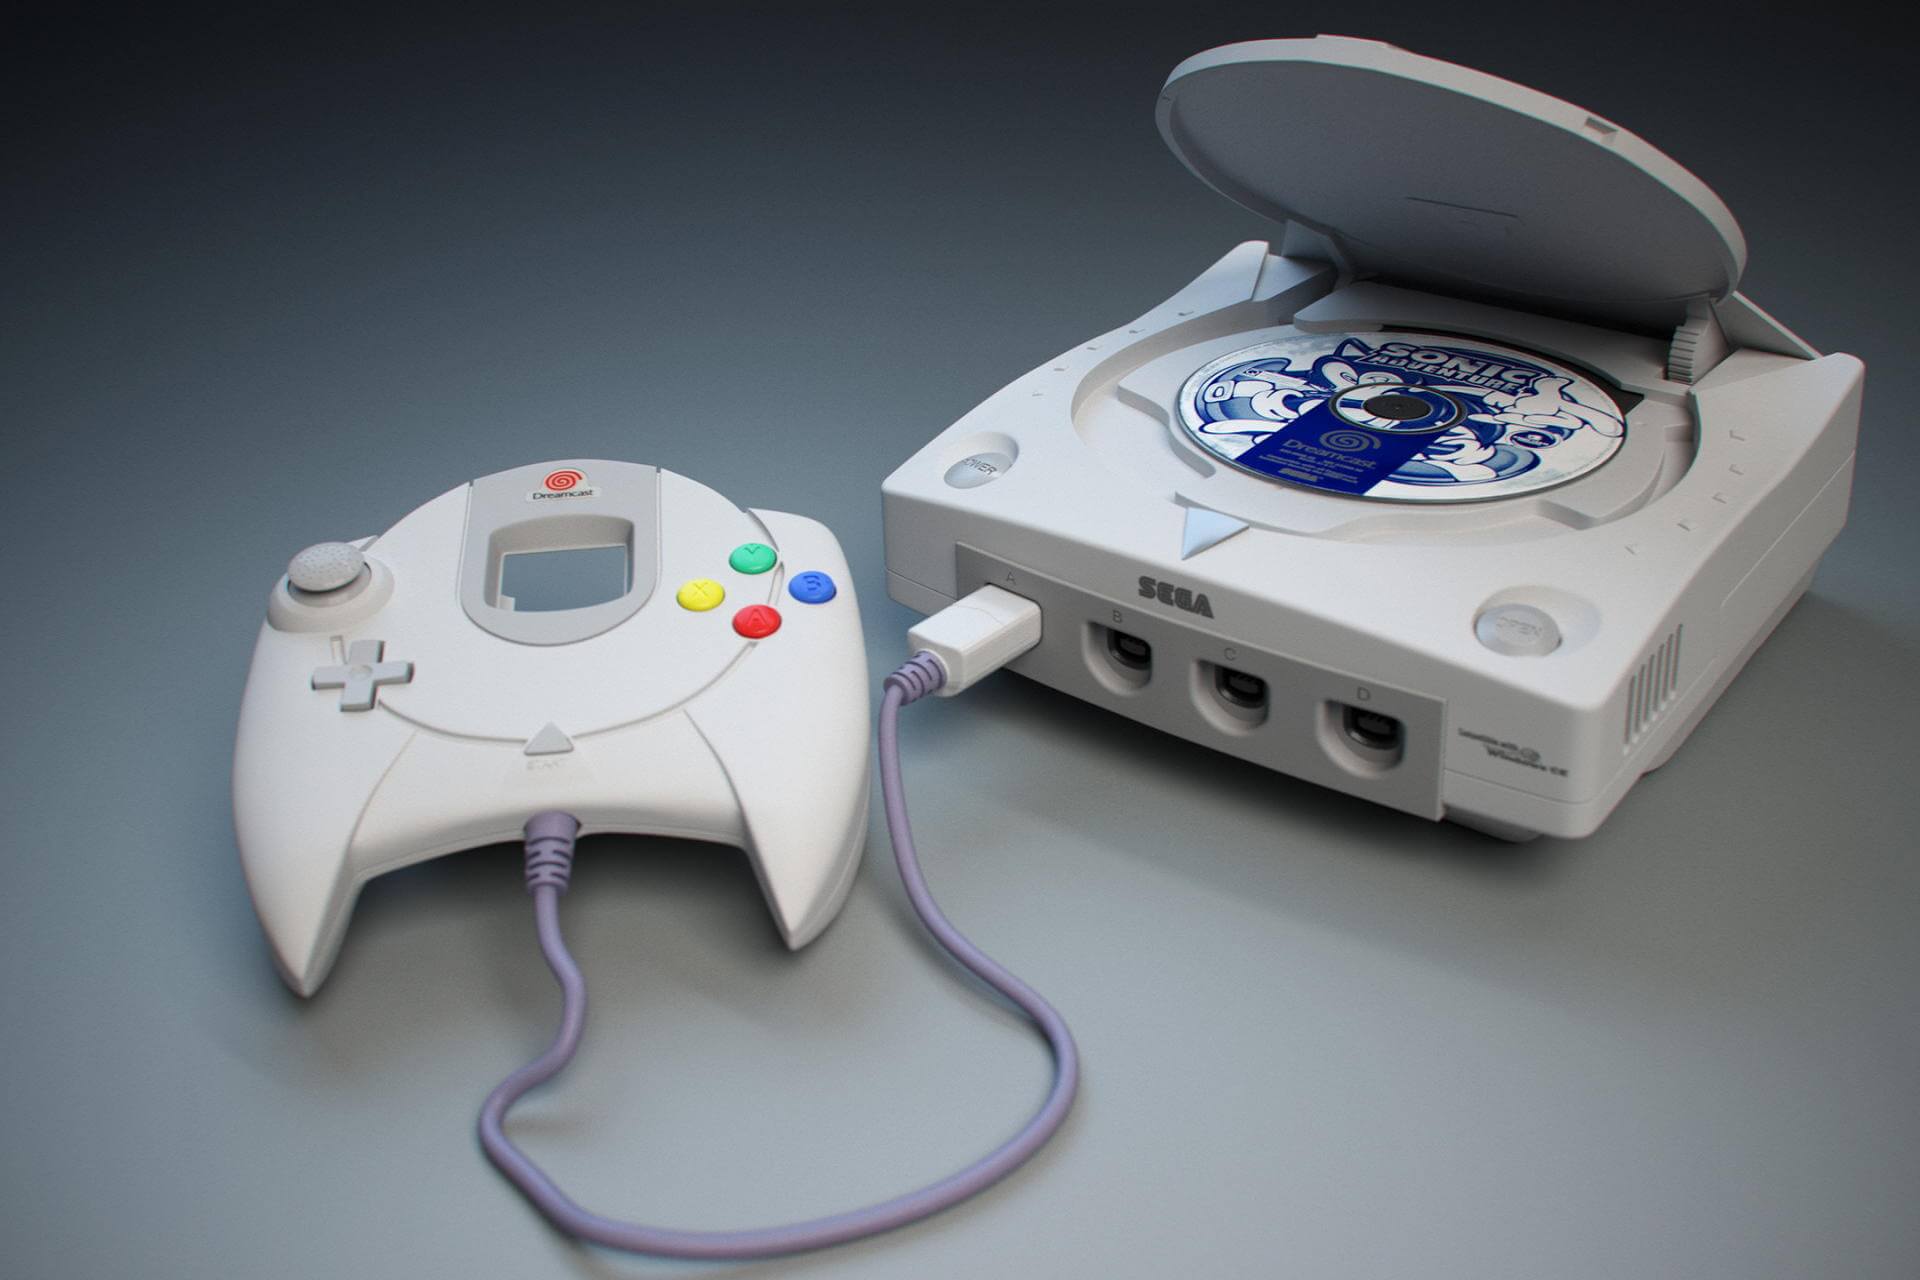 Sega Dreamcast emulators for Windows 10